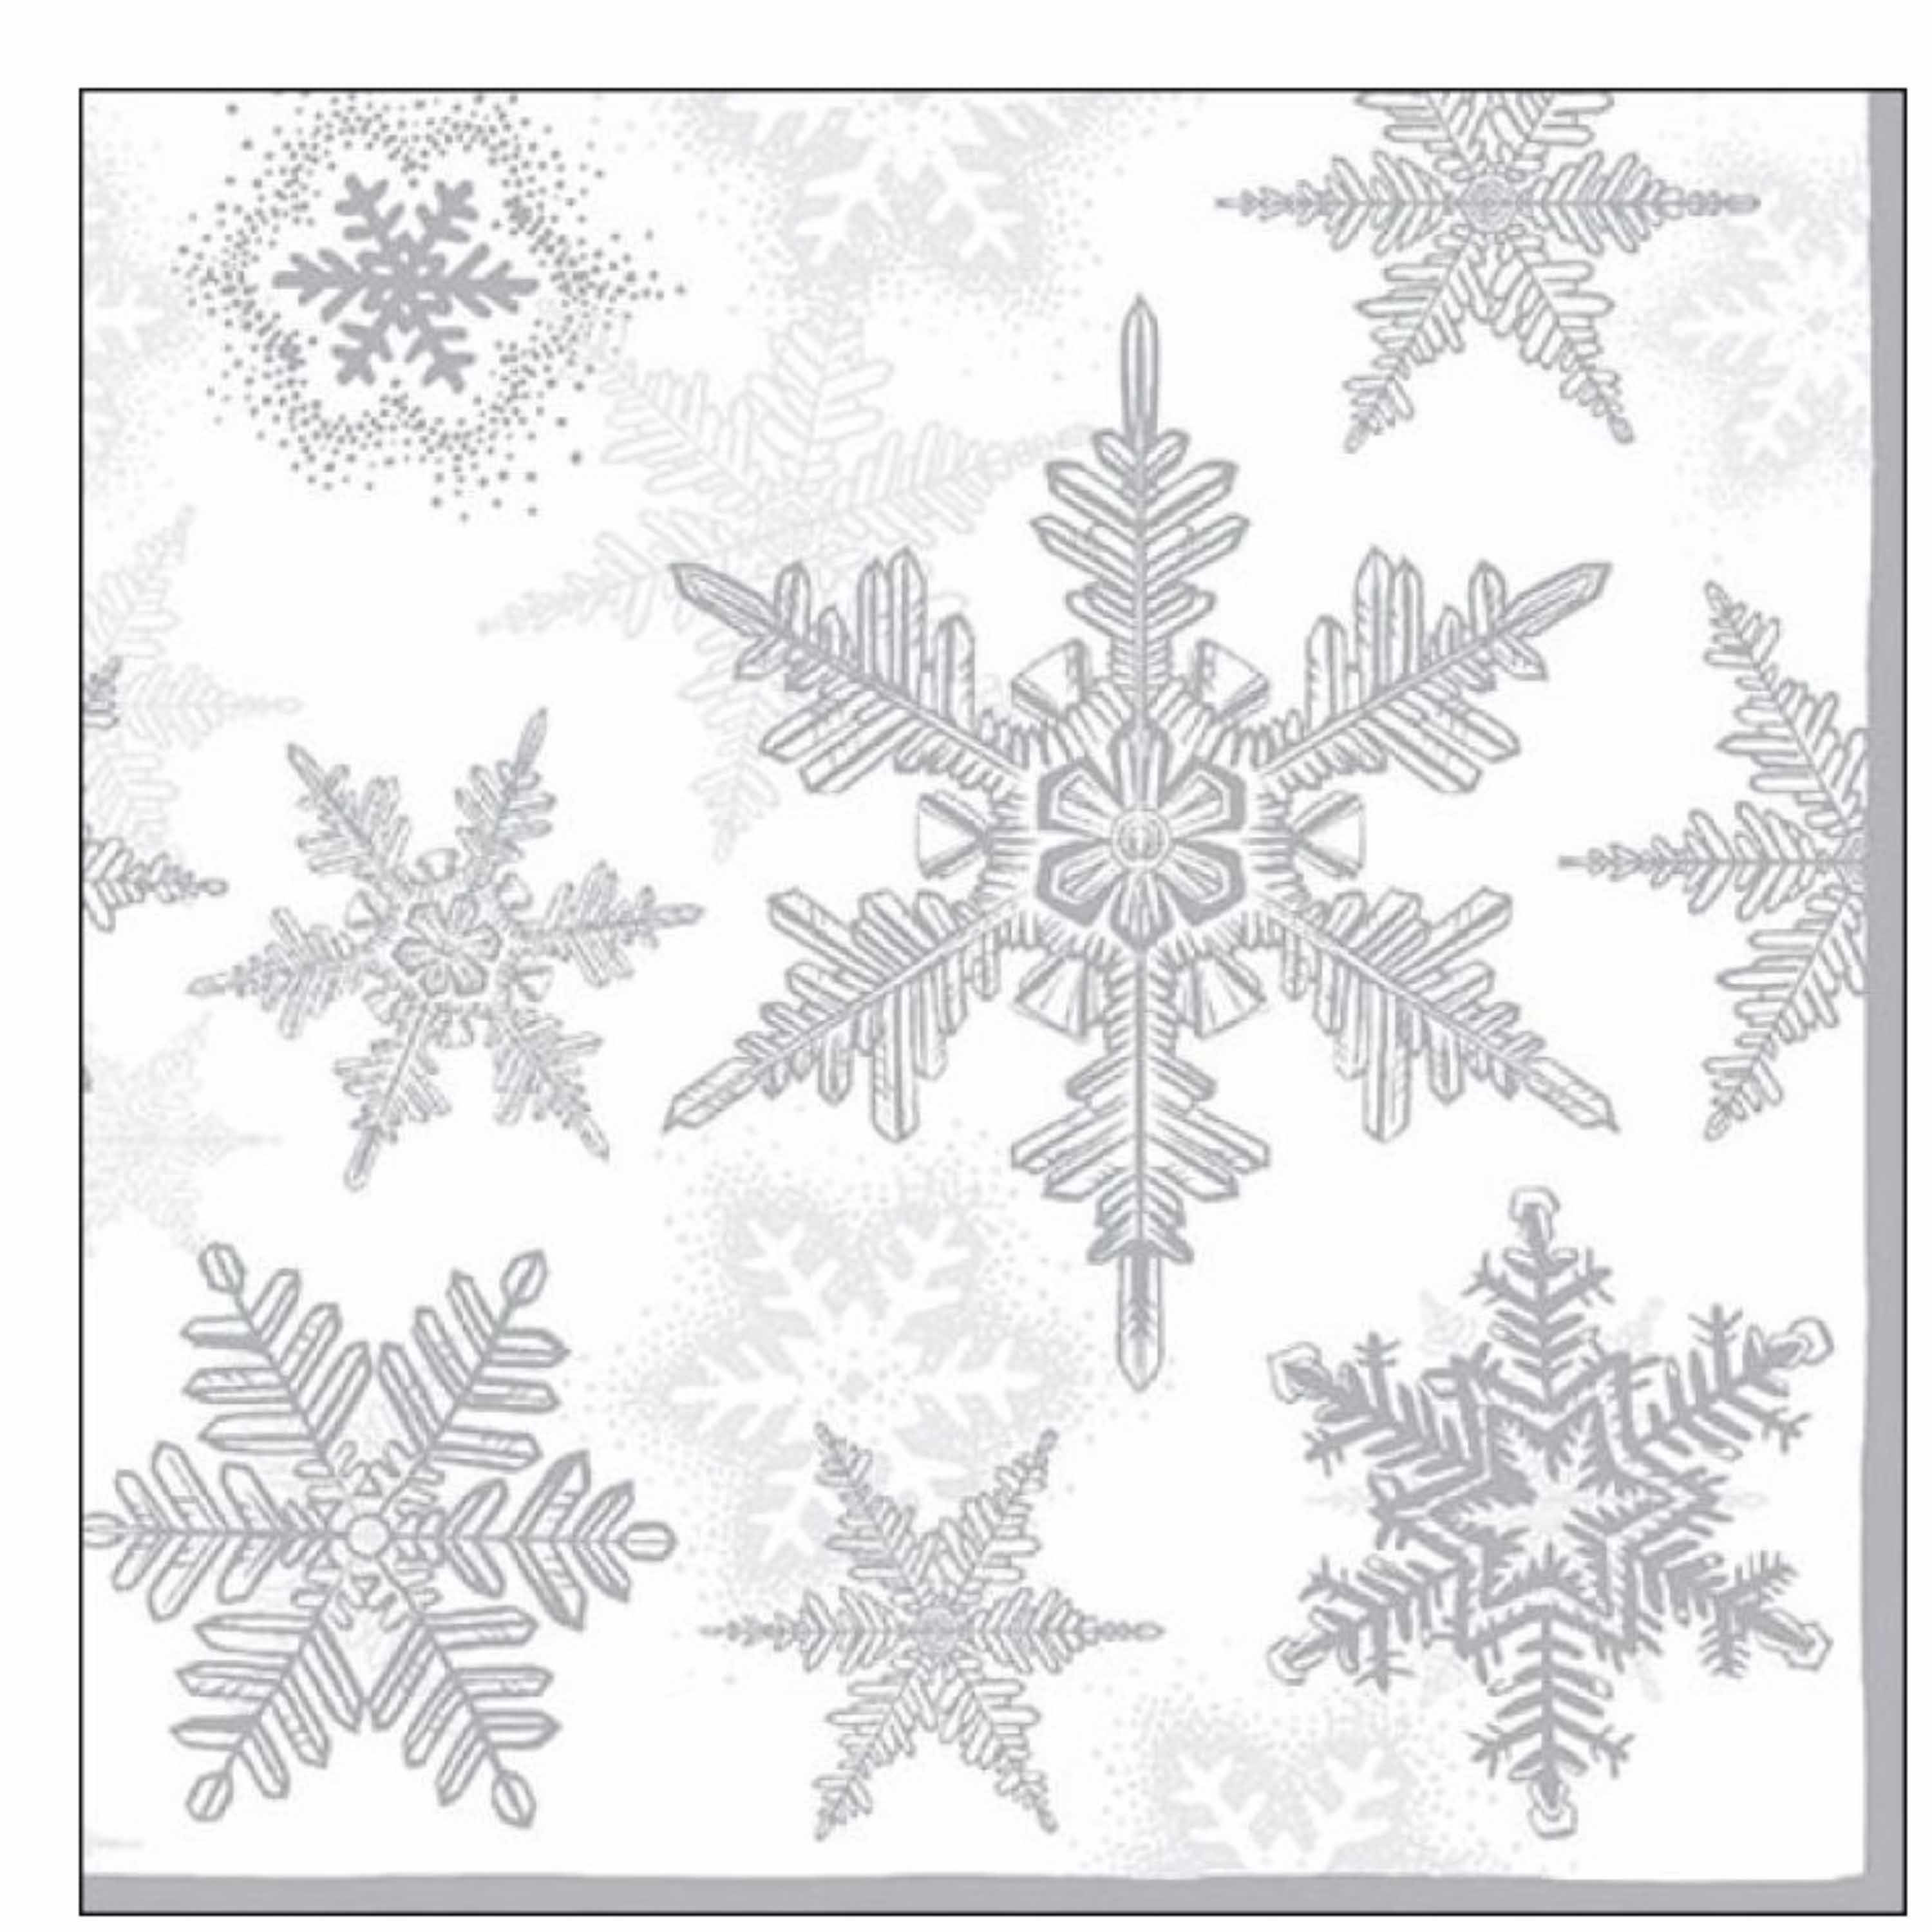 20x Servetten winter sneeuwvlokken thema wit-zilver 33 x 33 cm